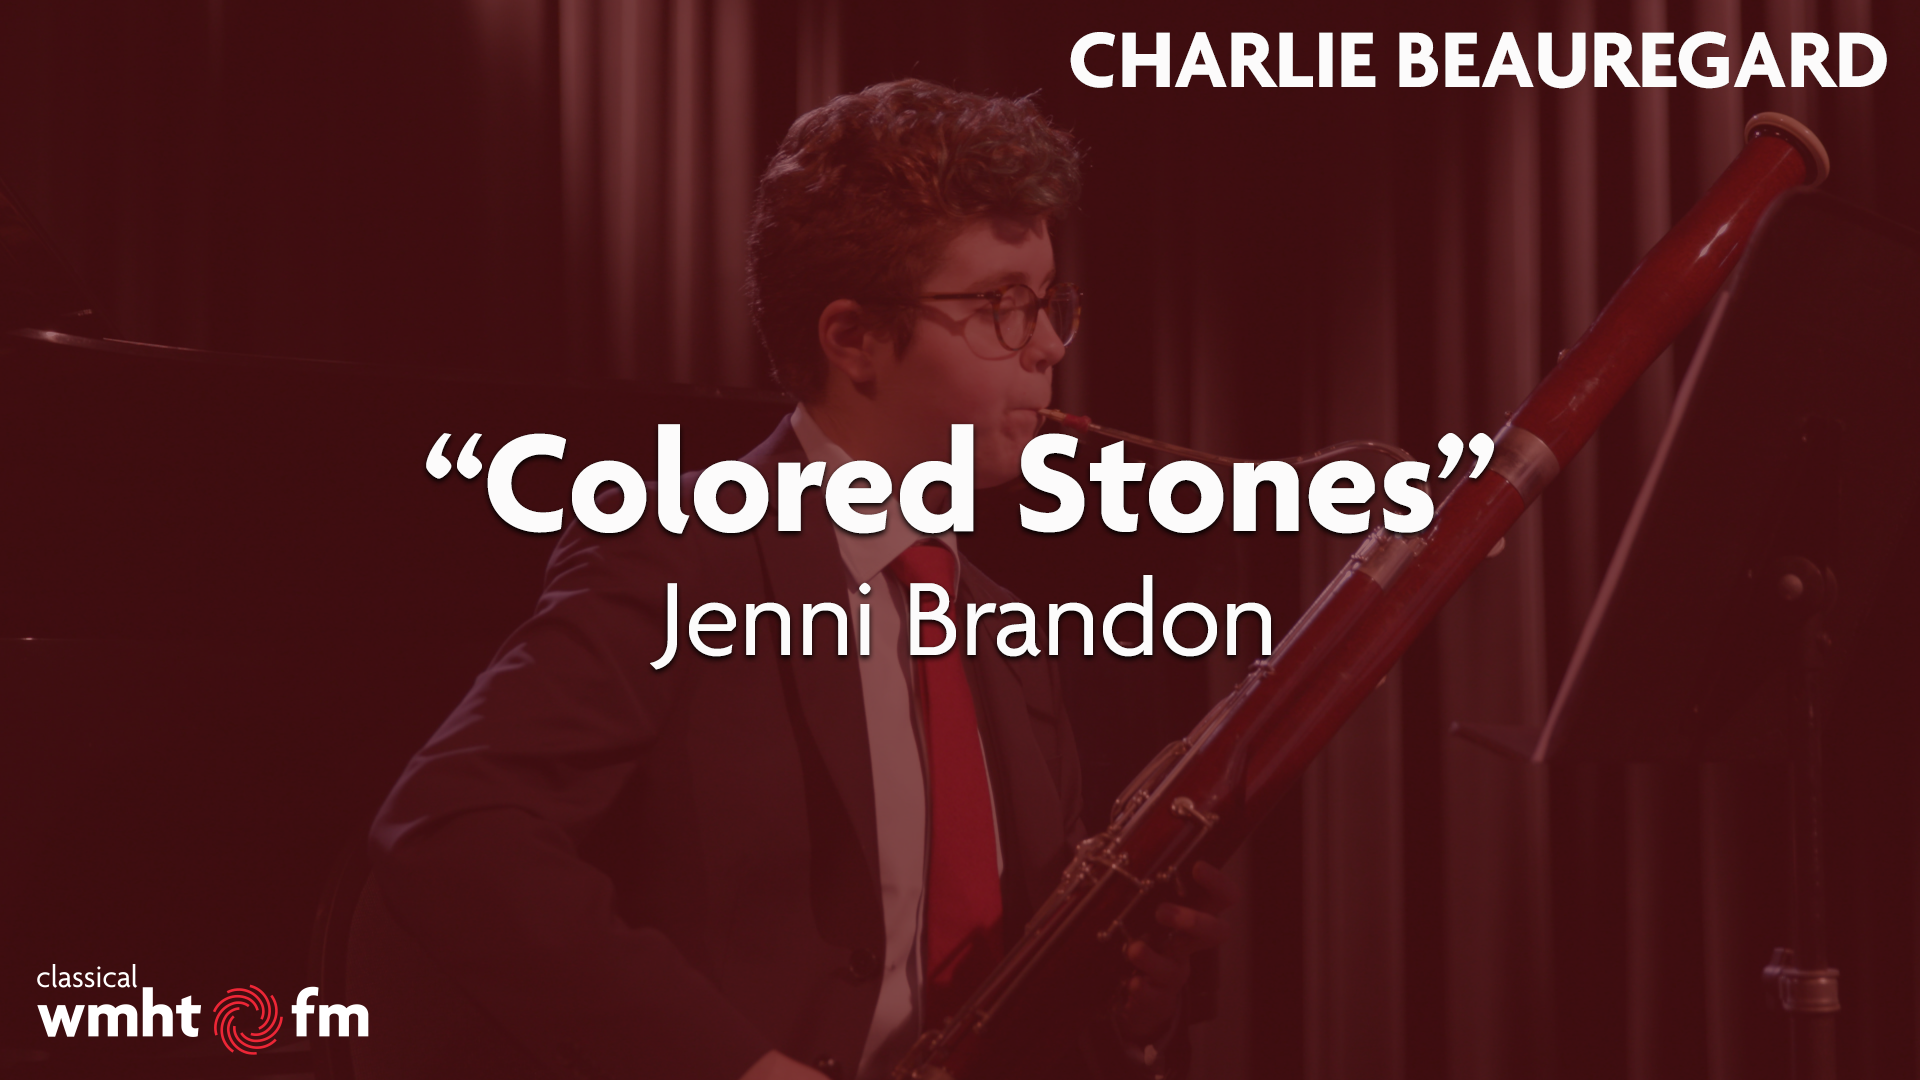 Charlie Beauregard: “Colored Stones” by Jenni Brandon